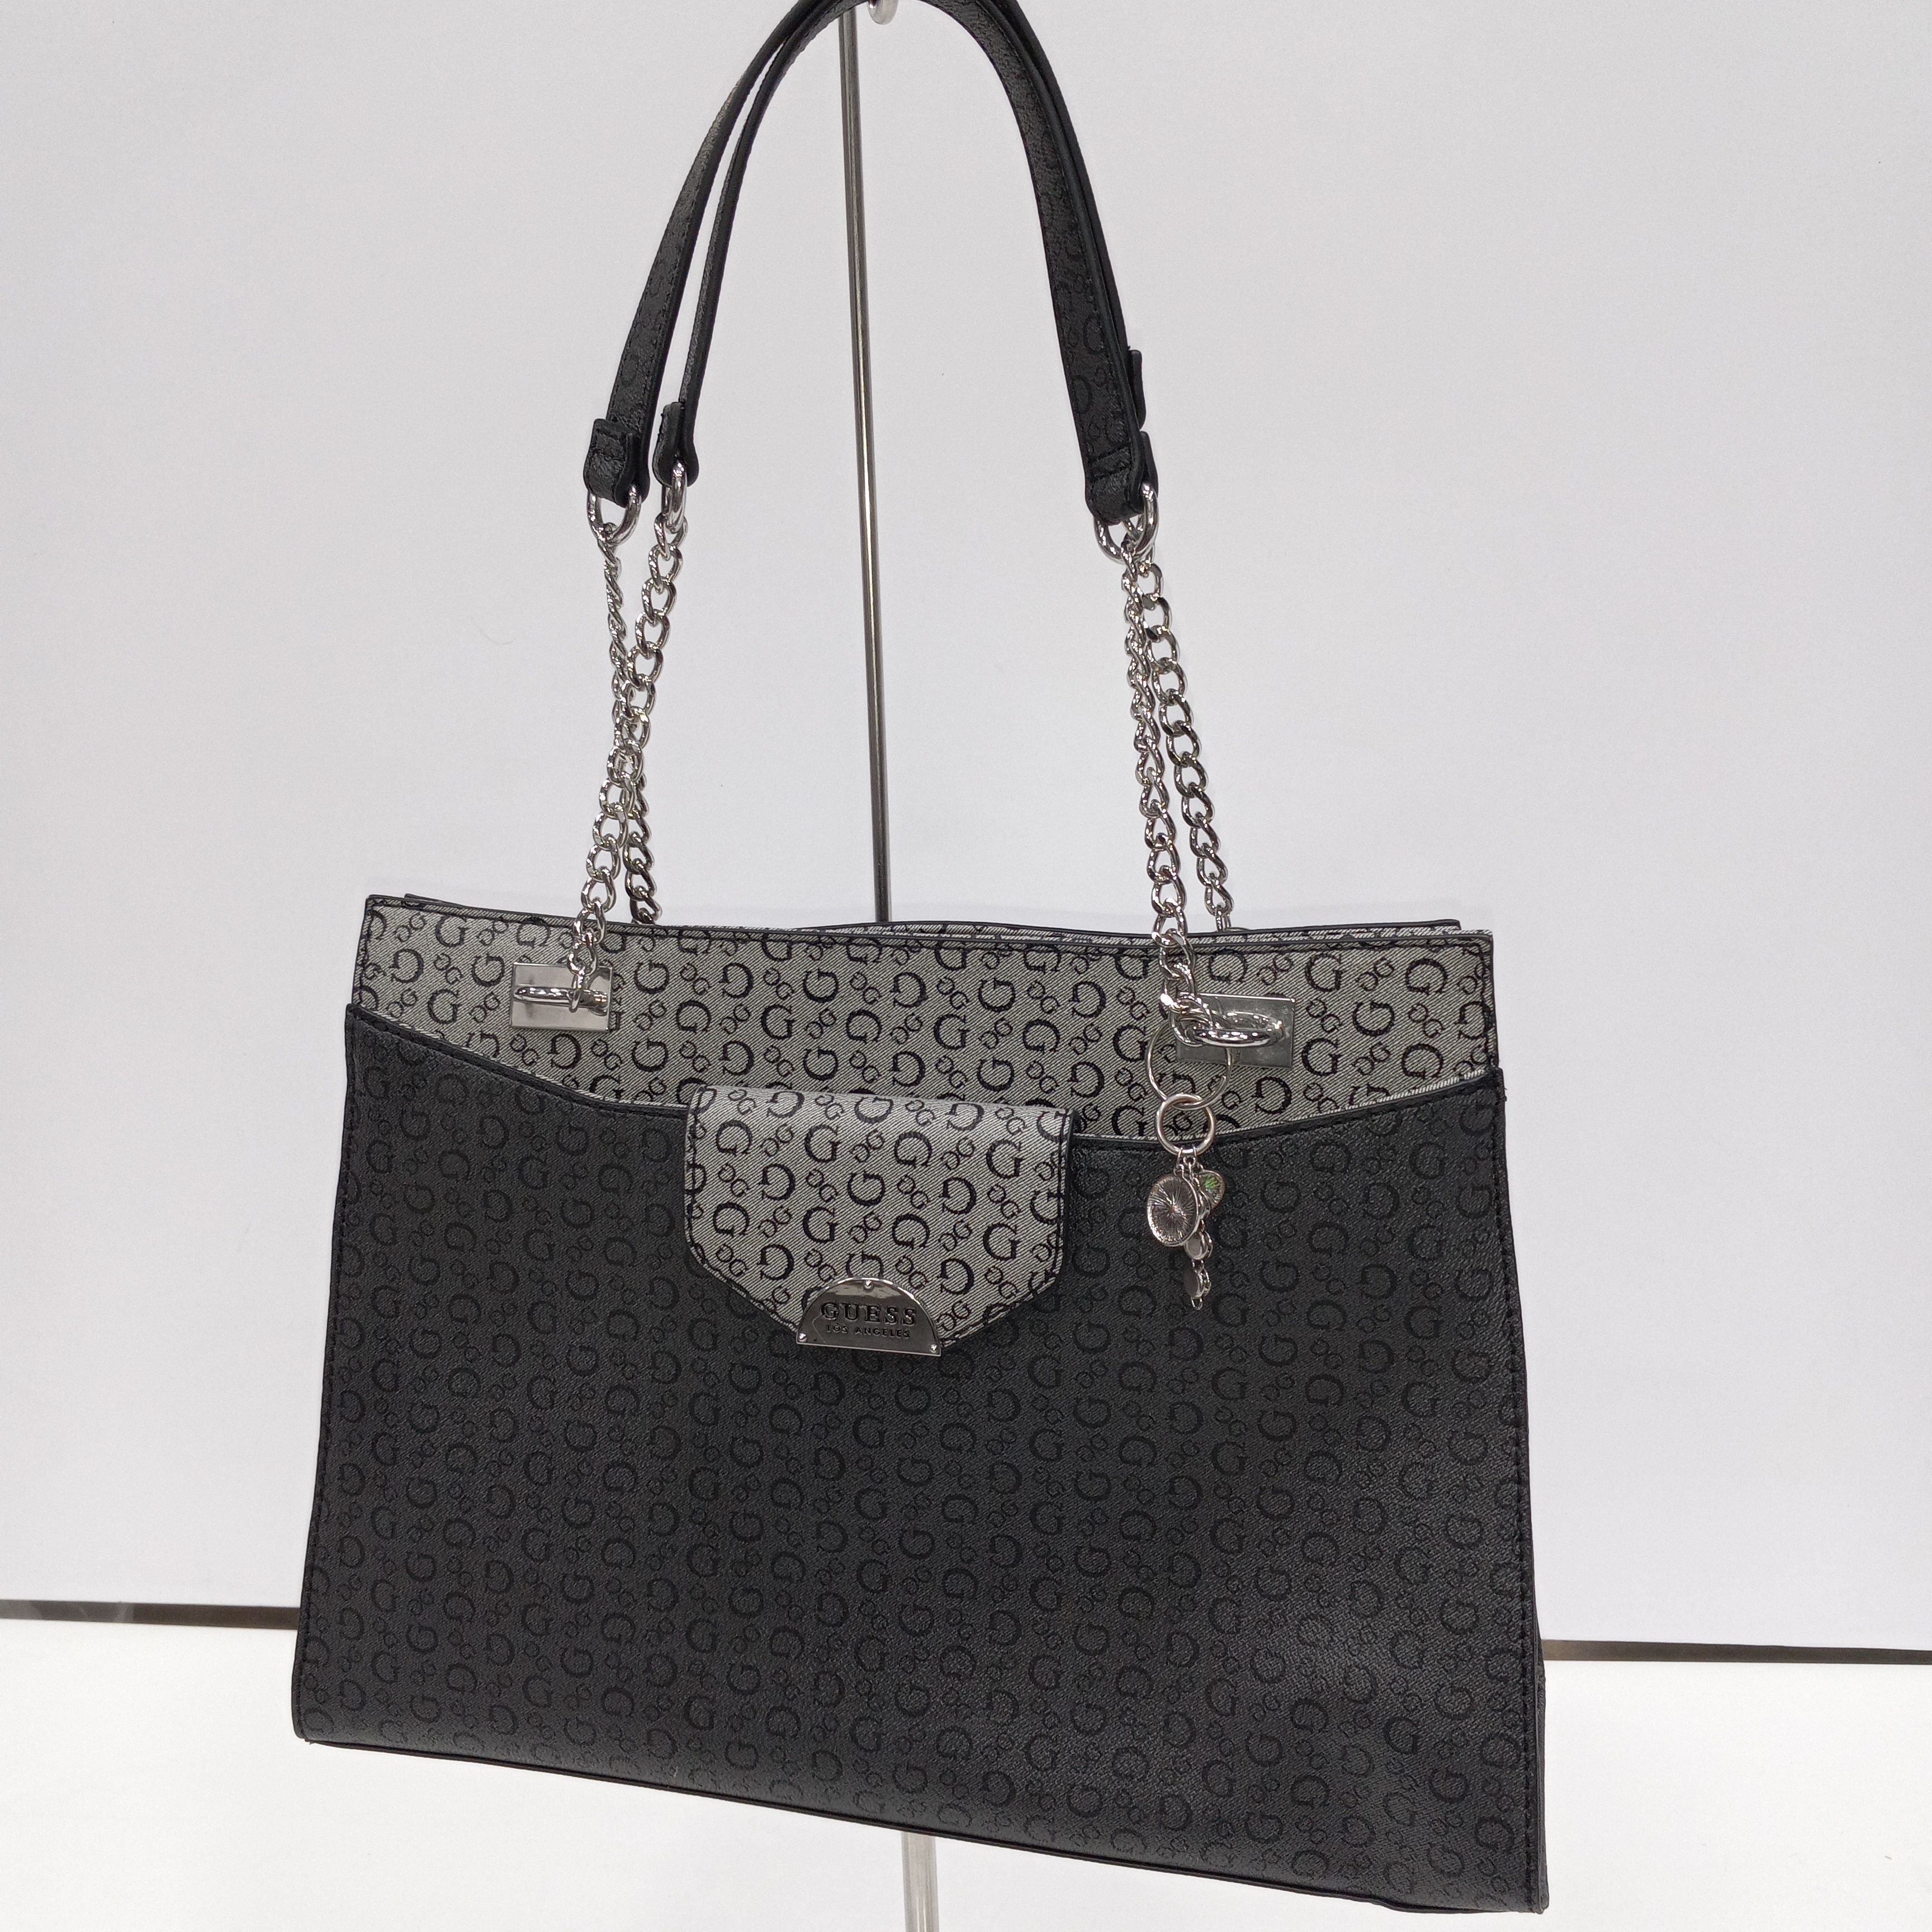 WOMAN'S GUESS HANDBAG Purse Black With Removable Strap Ladies Shoulder Bag  £23.51 - PicClick UK